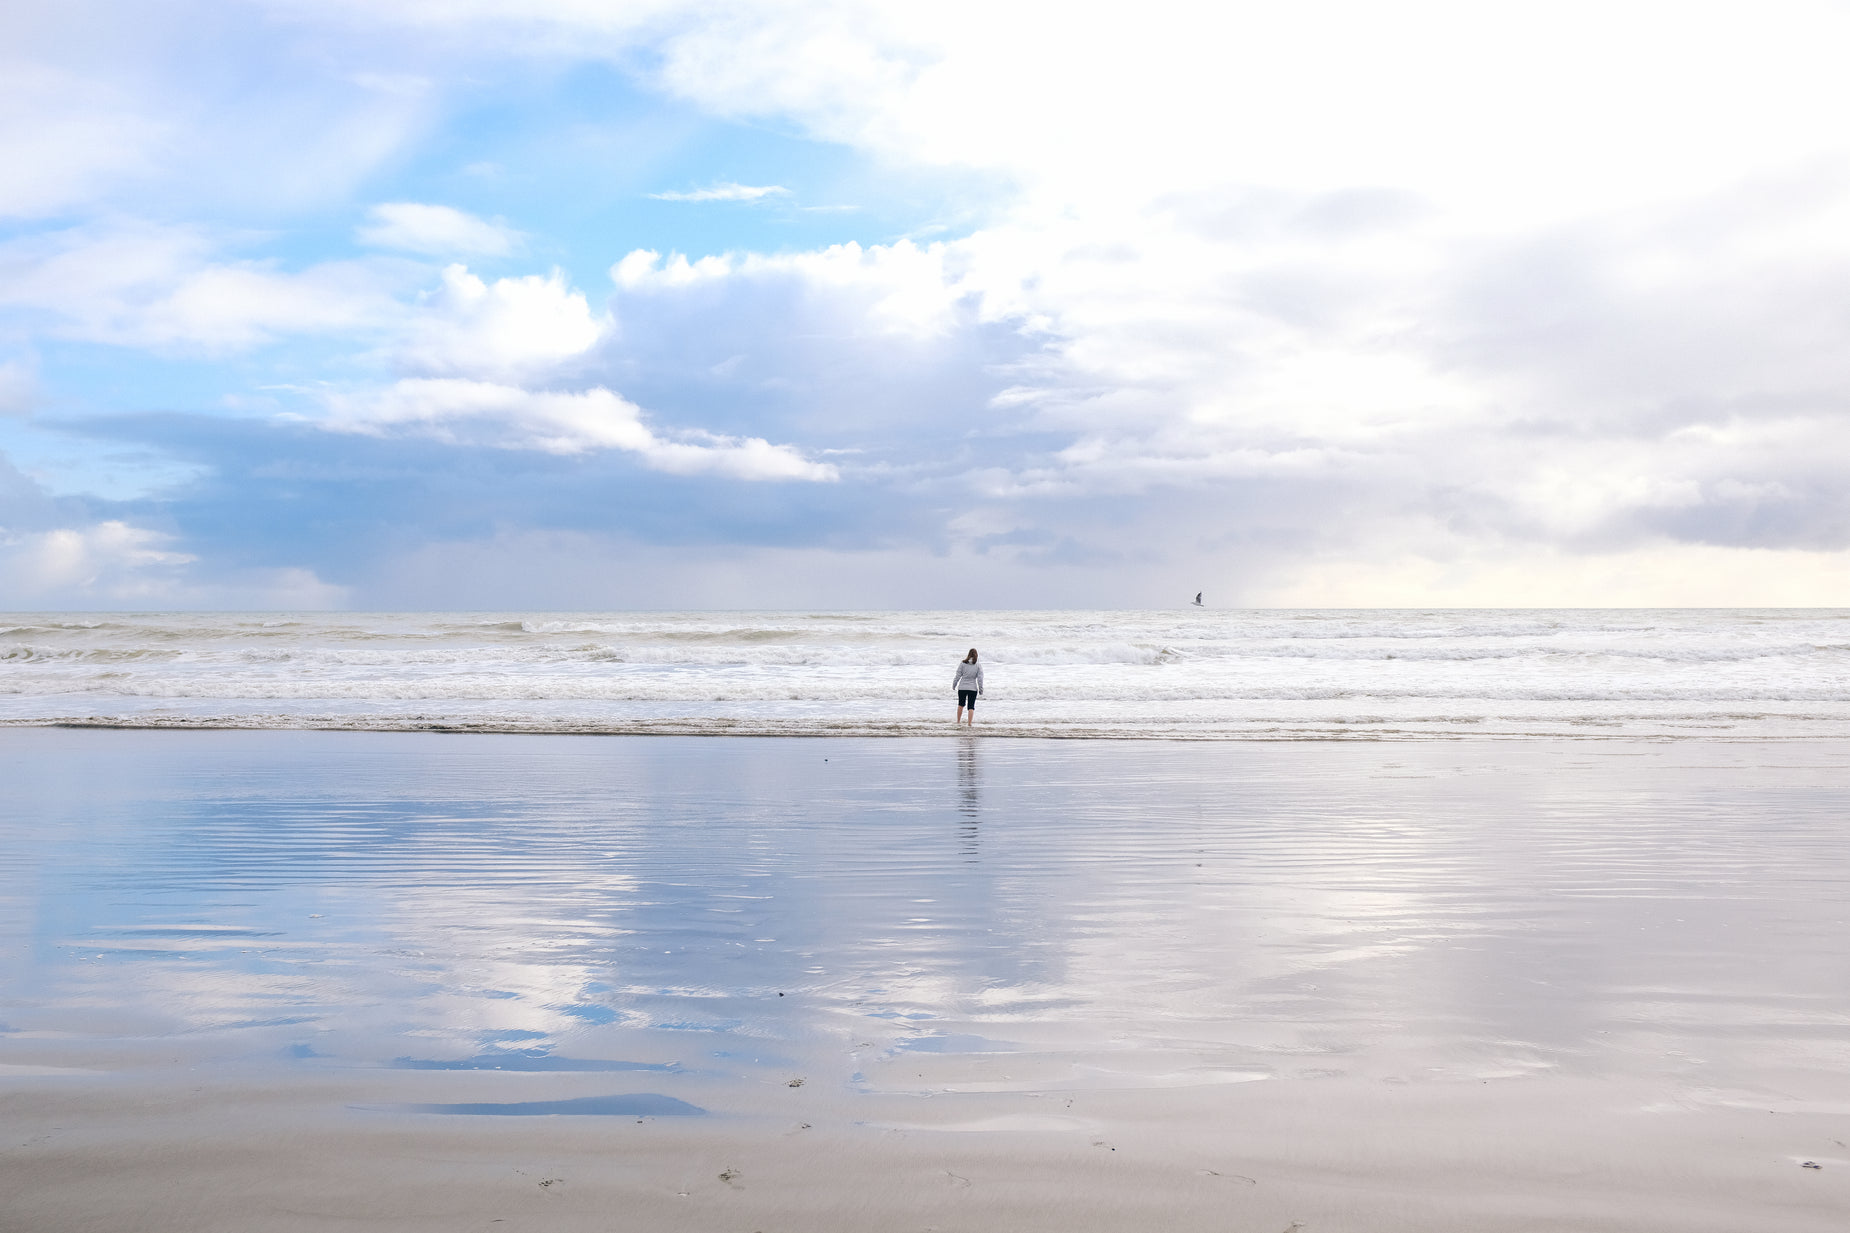 a man walks on the beach near an ocean